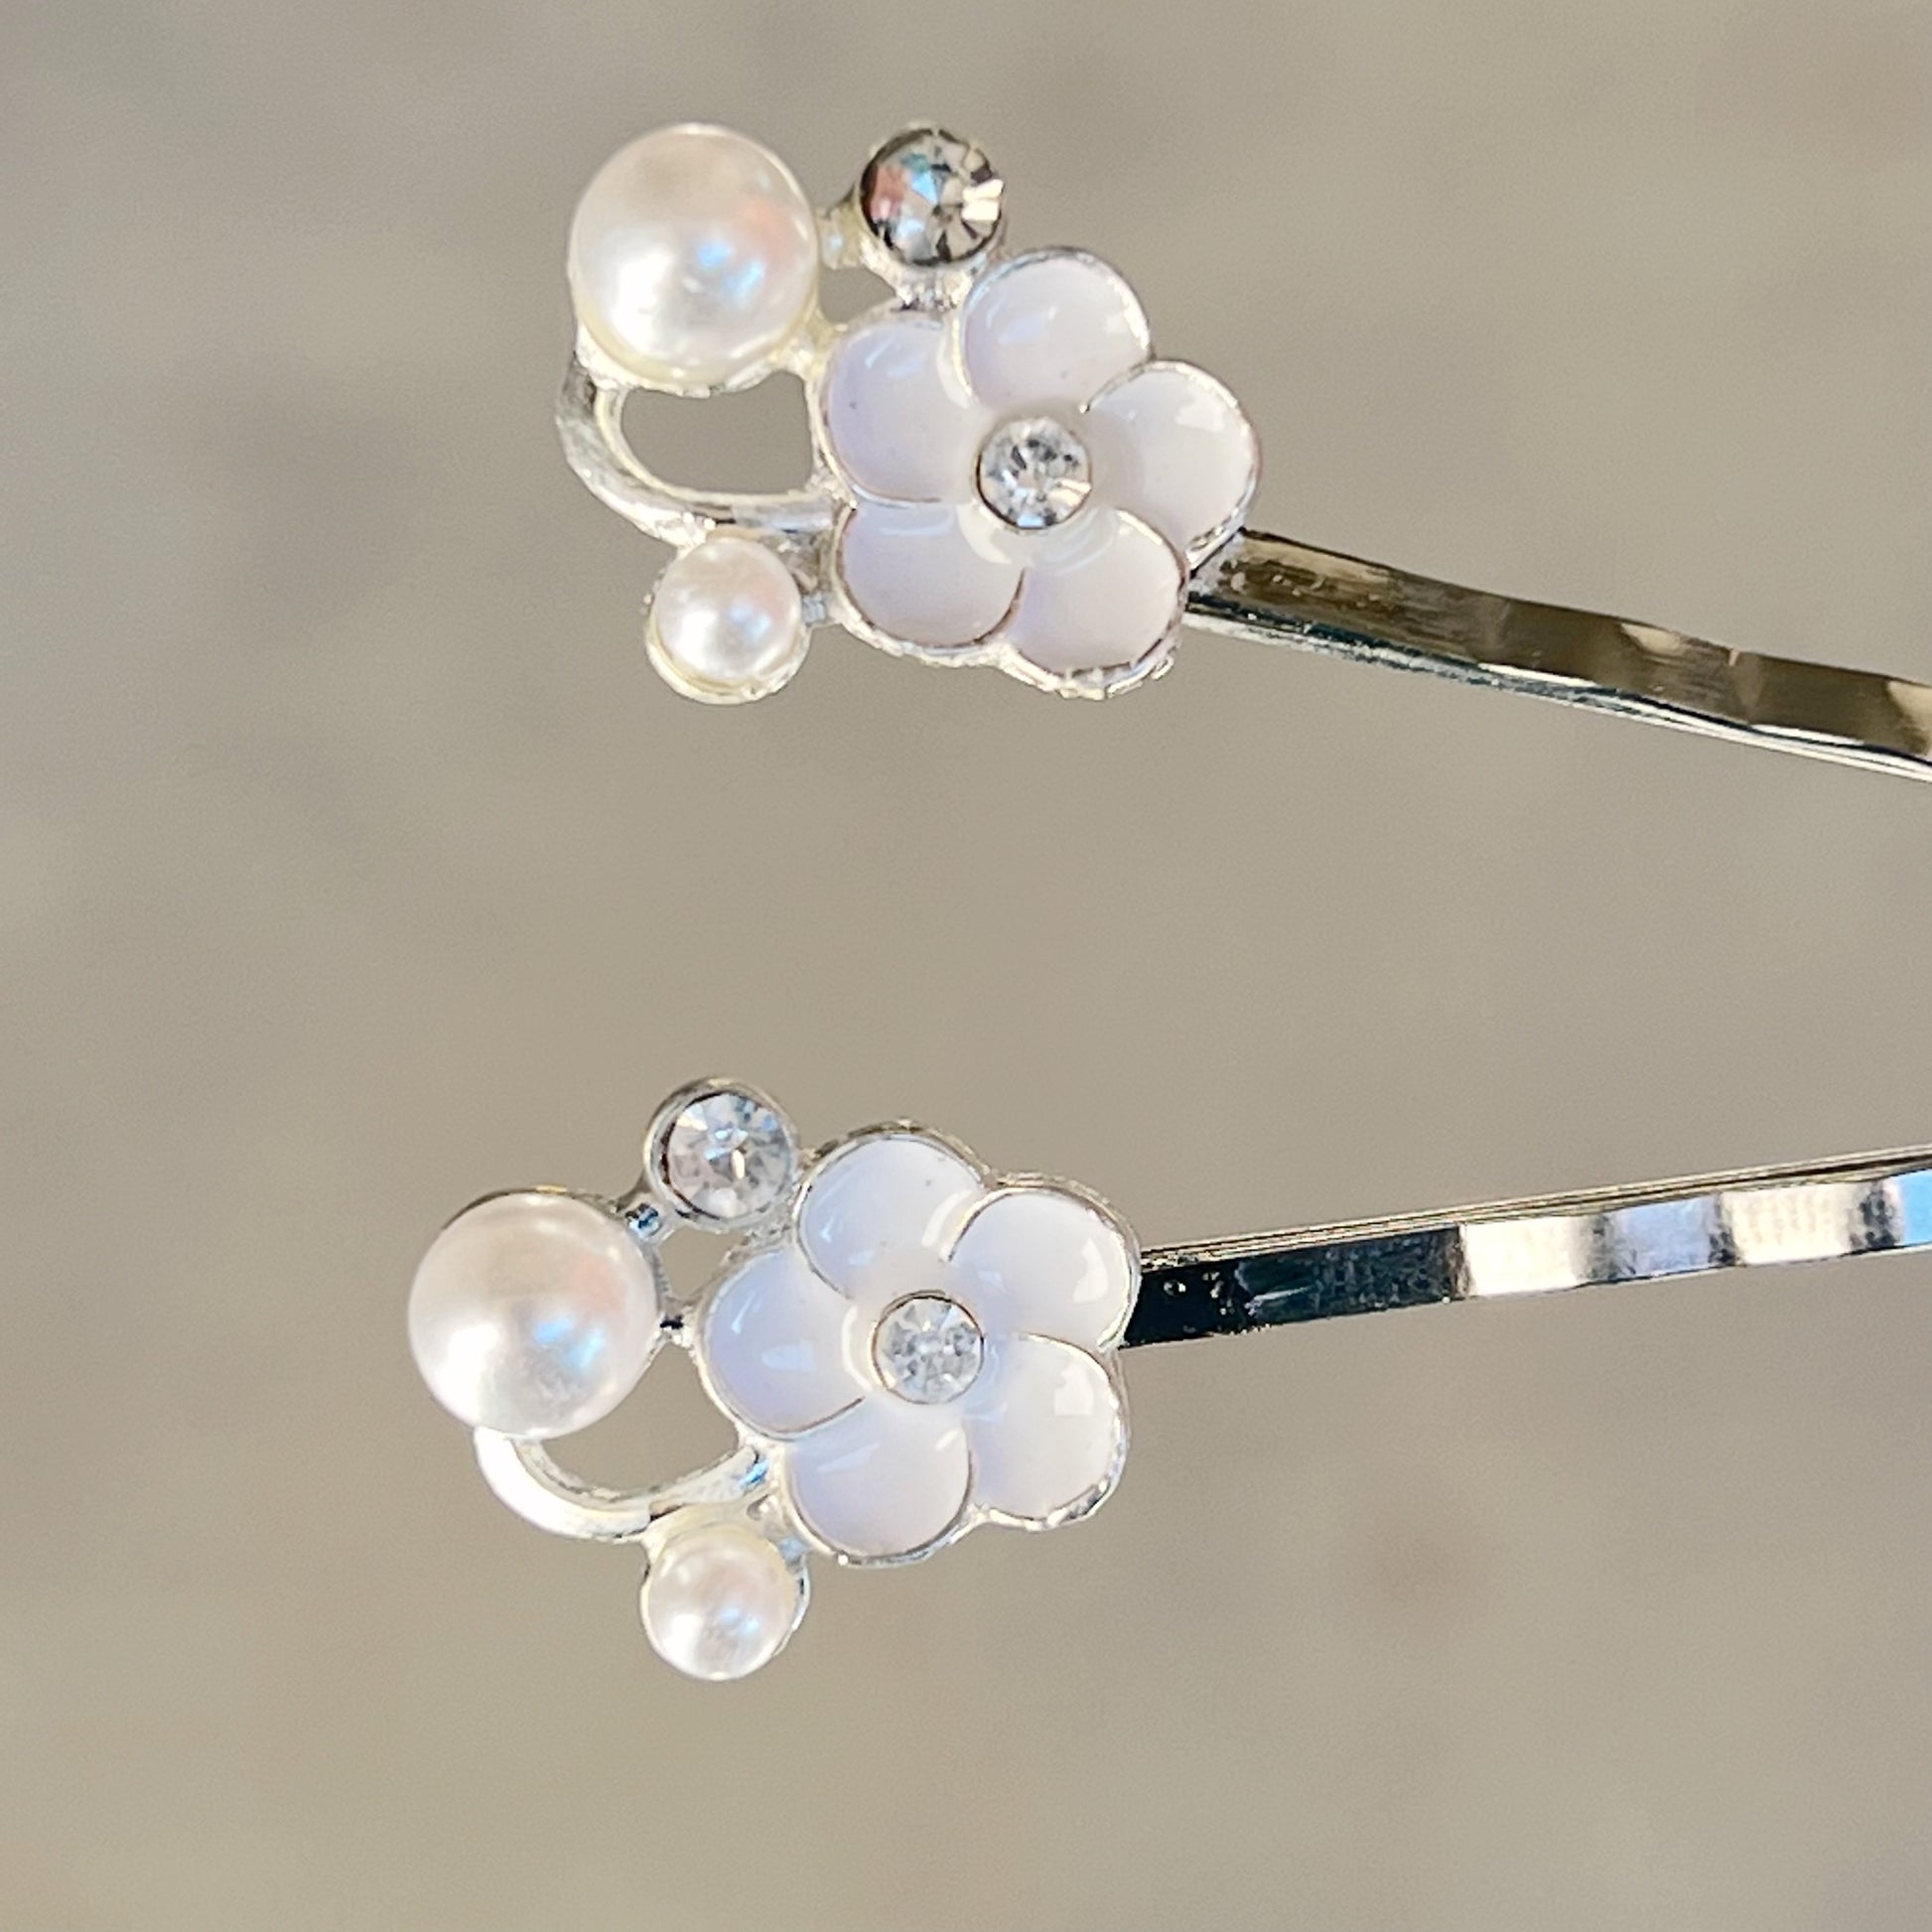 White Flower Pearl & Rhinestone Hair Pins: Elegant Silver Accents